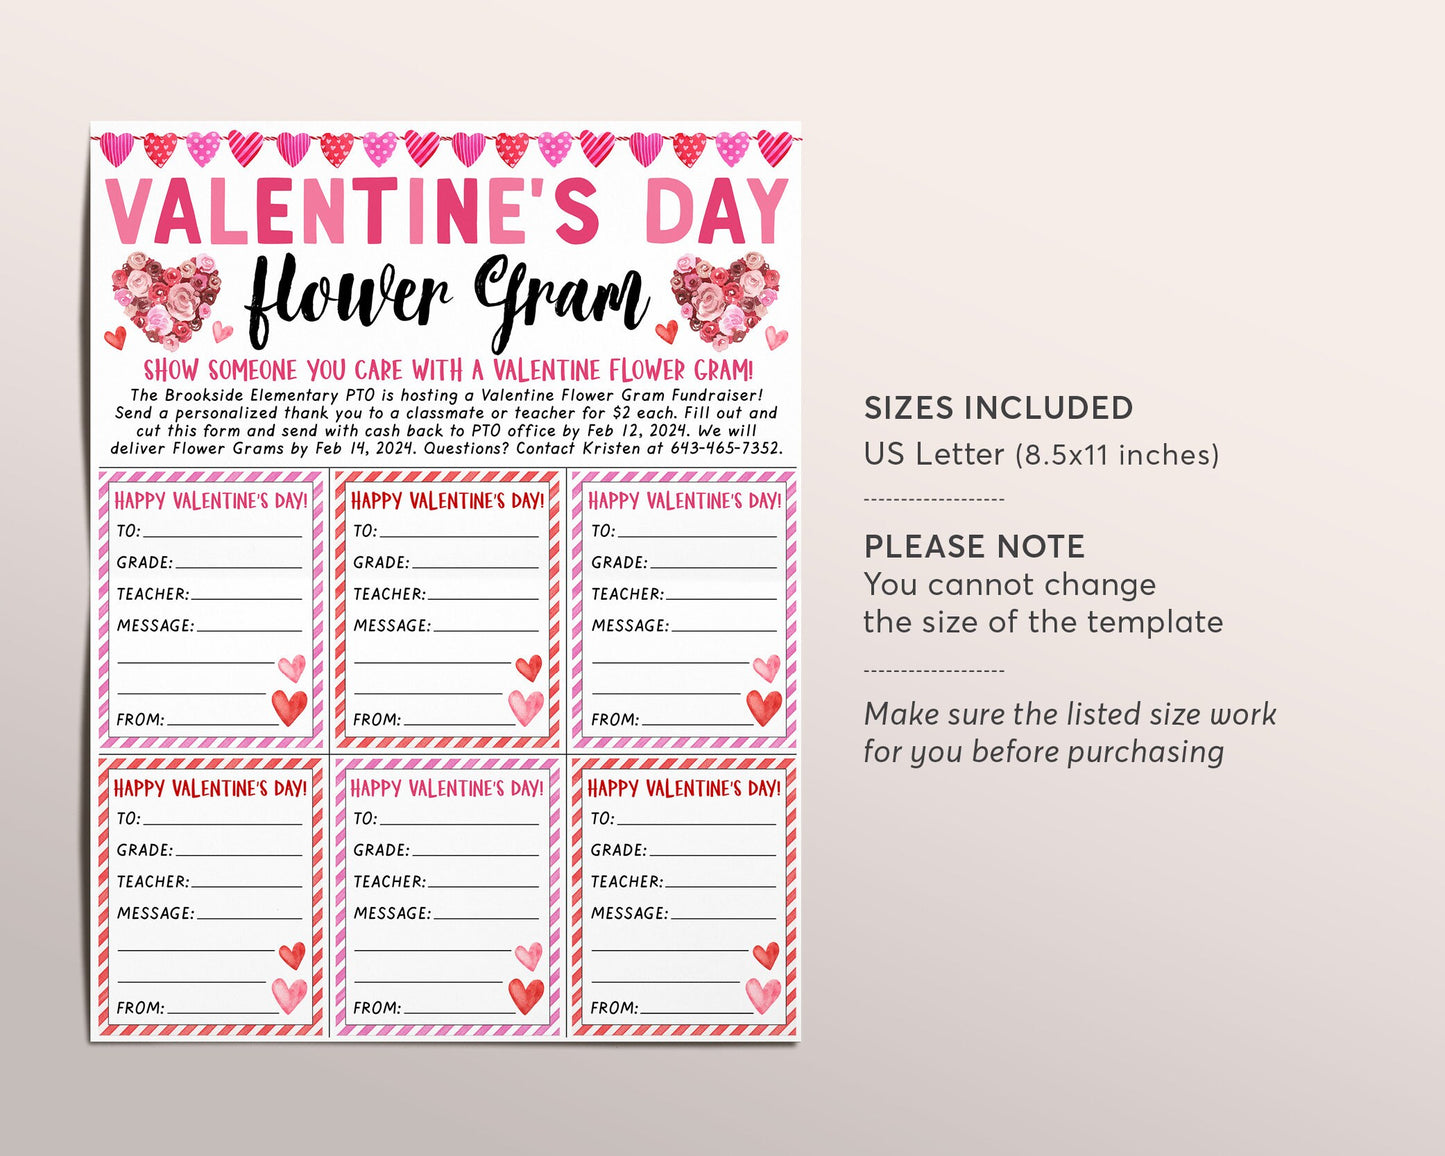 Valentine's Day Flower Gram Flyer Editable Template, Valentine Rose Flower Grams Fundraiser Event, PTA PTO School Nonprofit Church Community